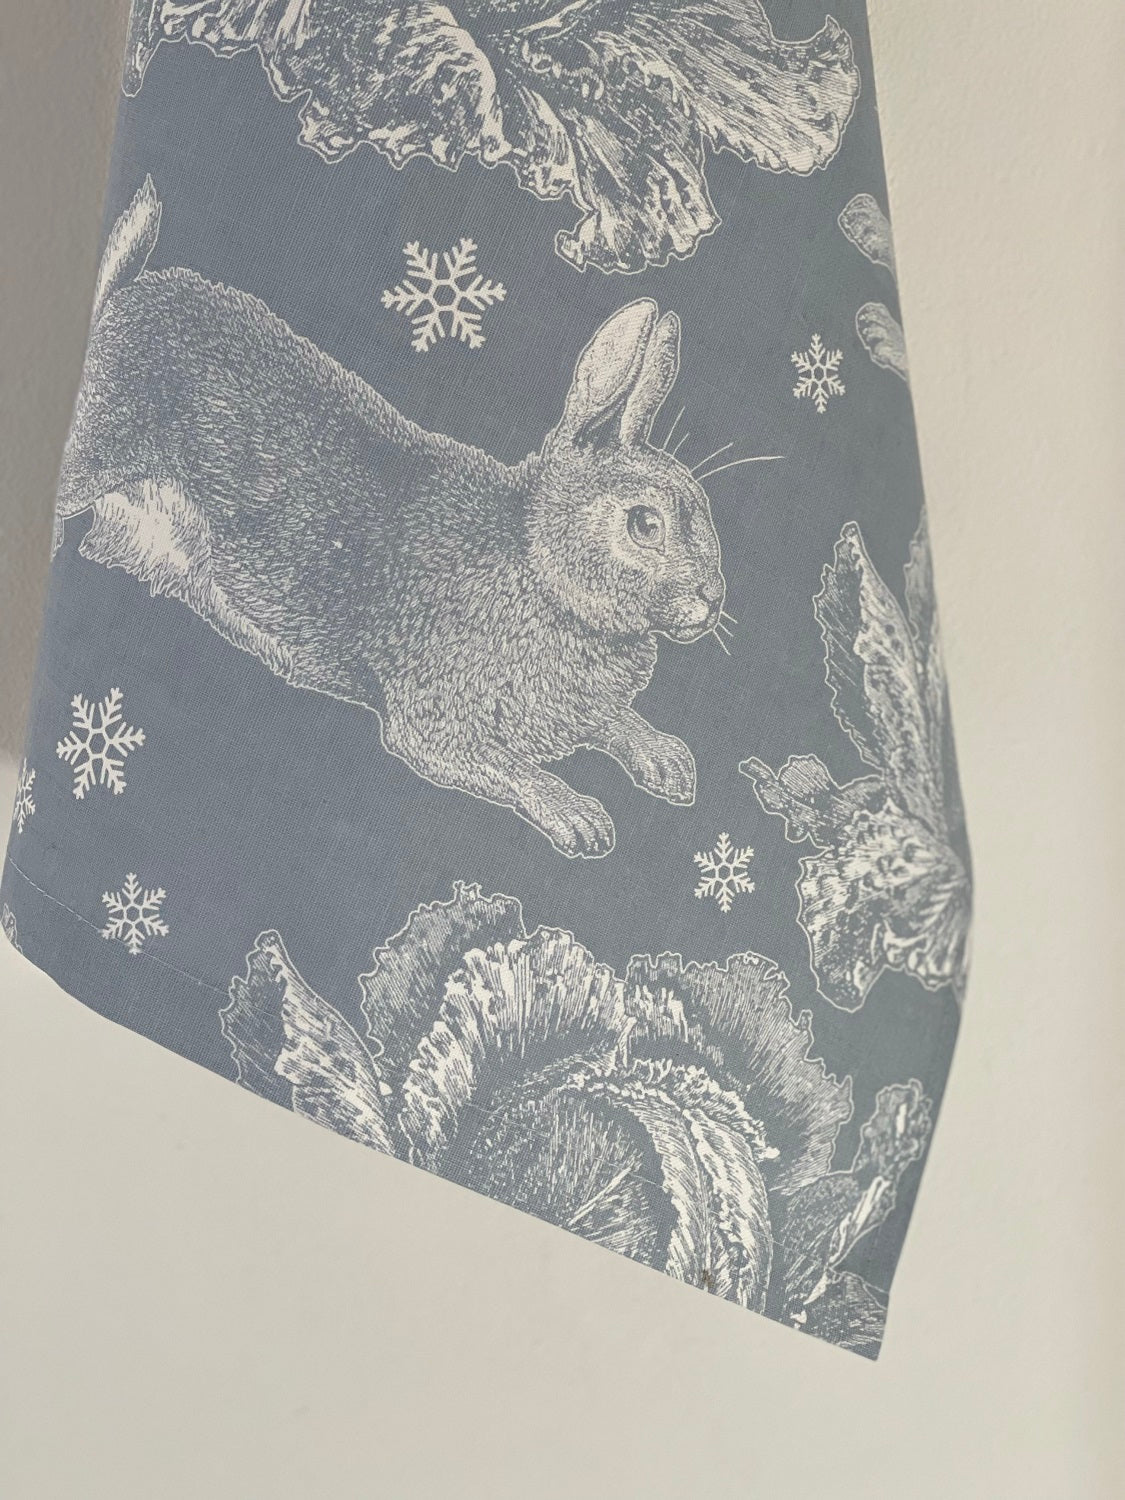 Thornback & Peel "Winter Rabbit & Cabbage", Pure cotton tea towel. Hand printed in the UK.